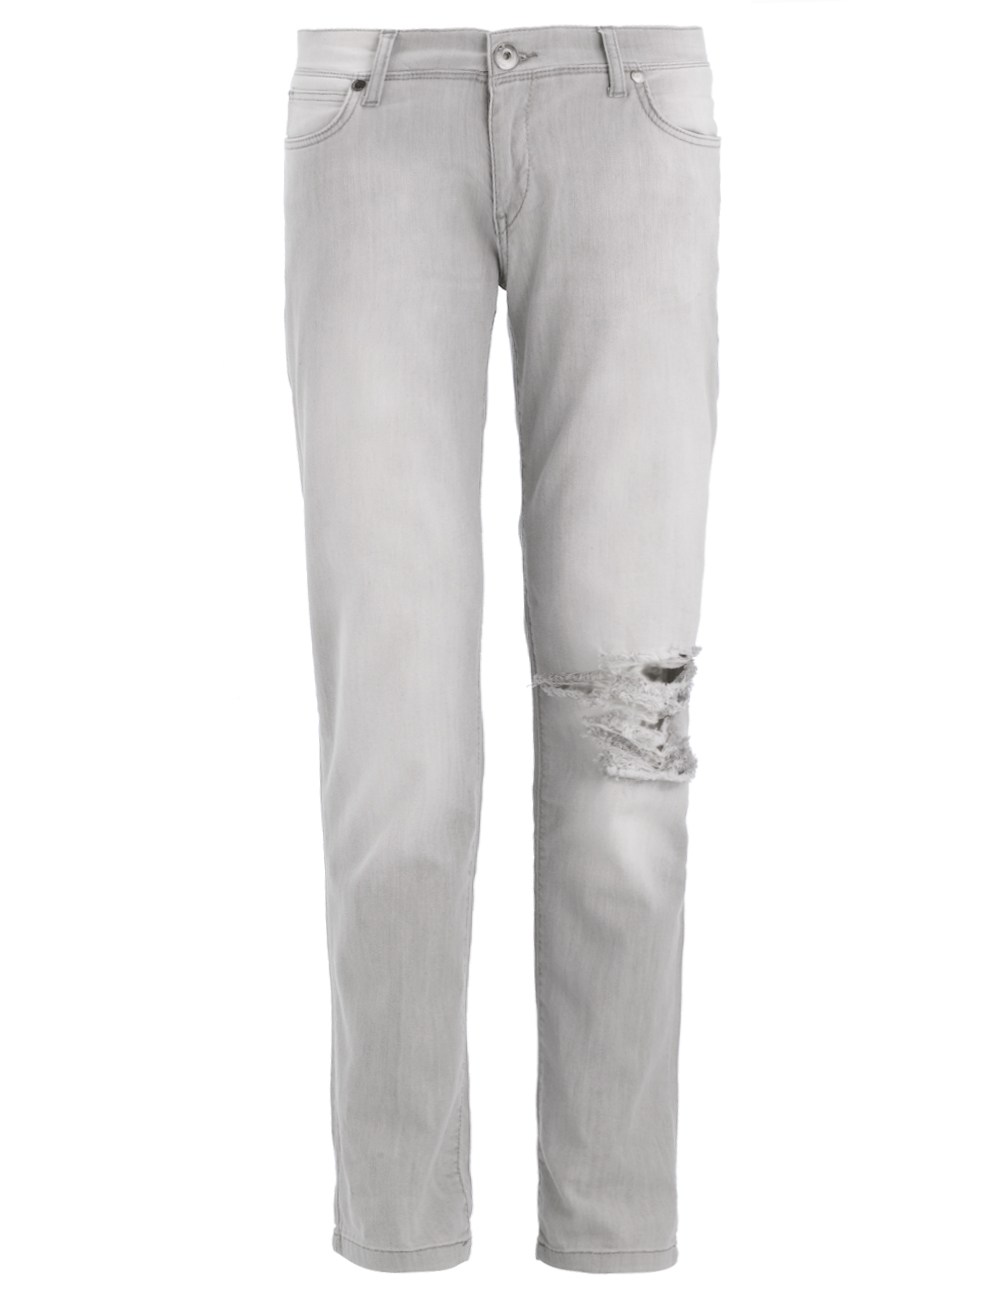 Svek Grey Ripped Jeans in Gray | Lyst